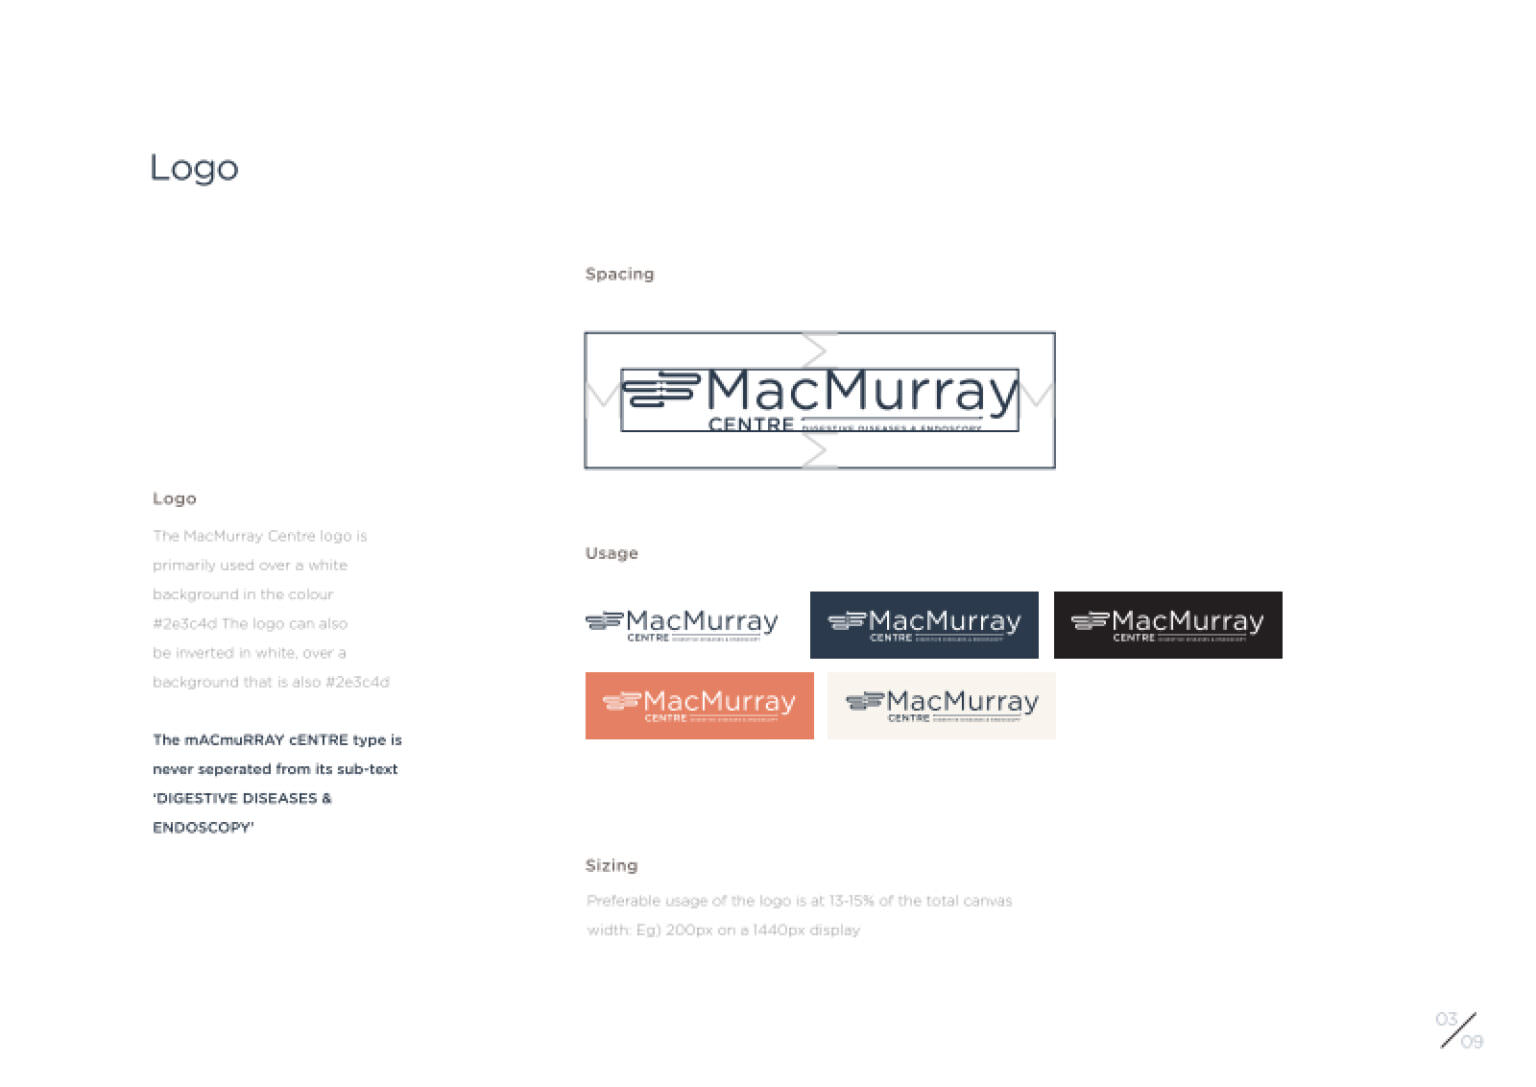 kinds of MacMurray logos